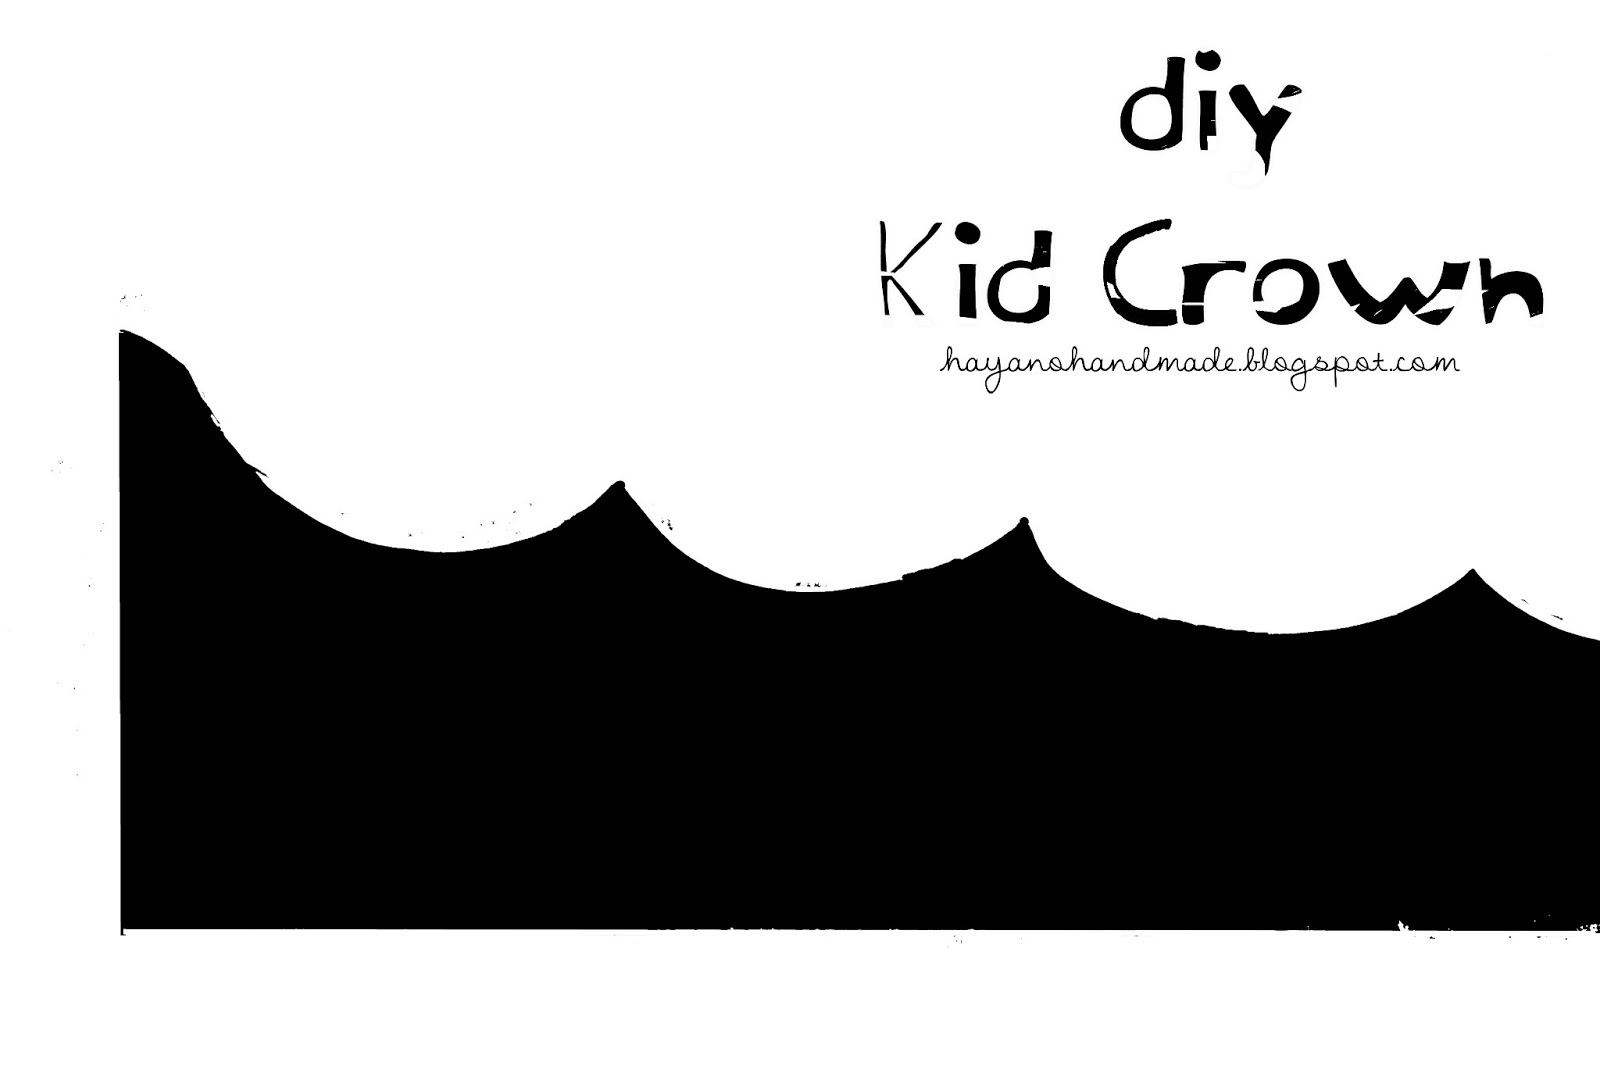 hayano handmade: How To Make Kid Crown